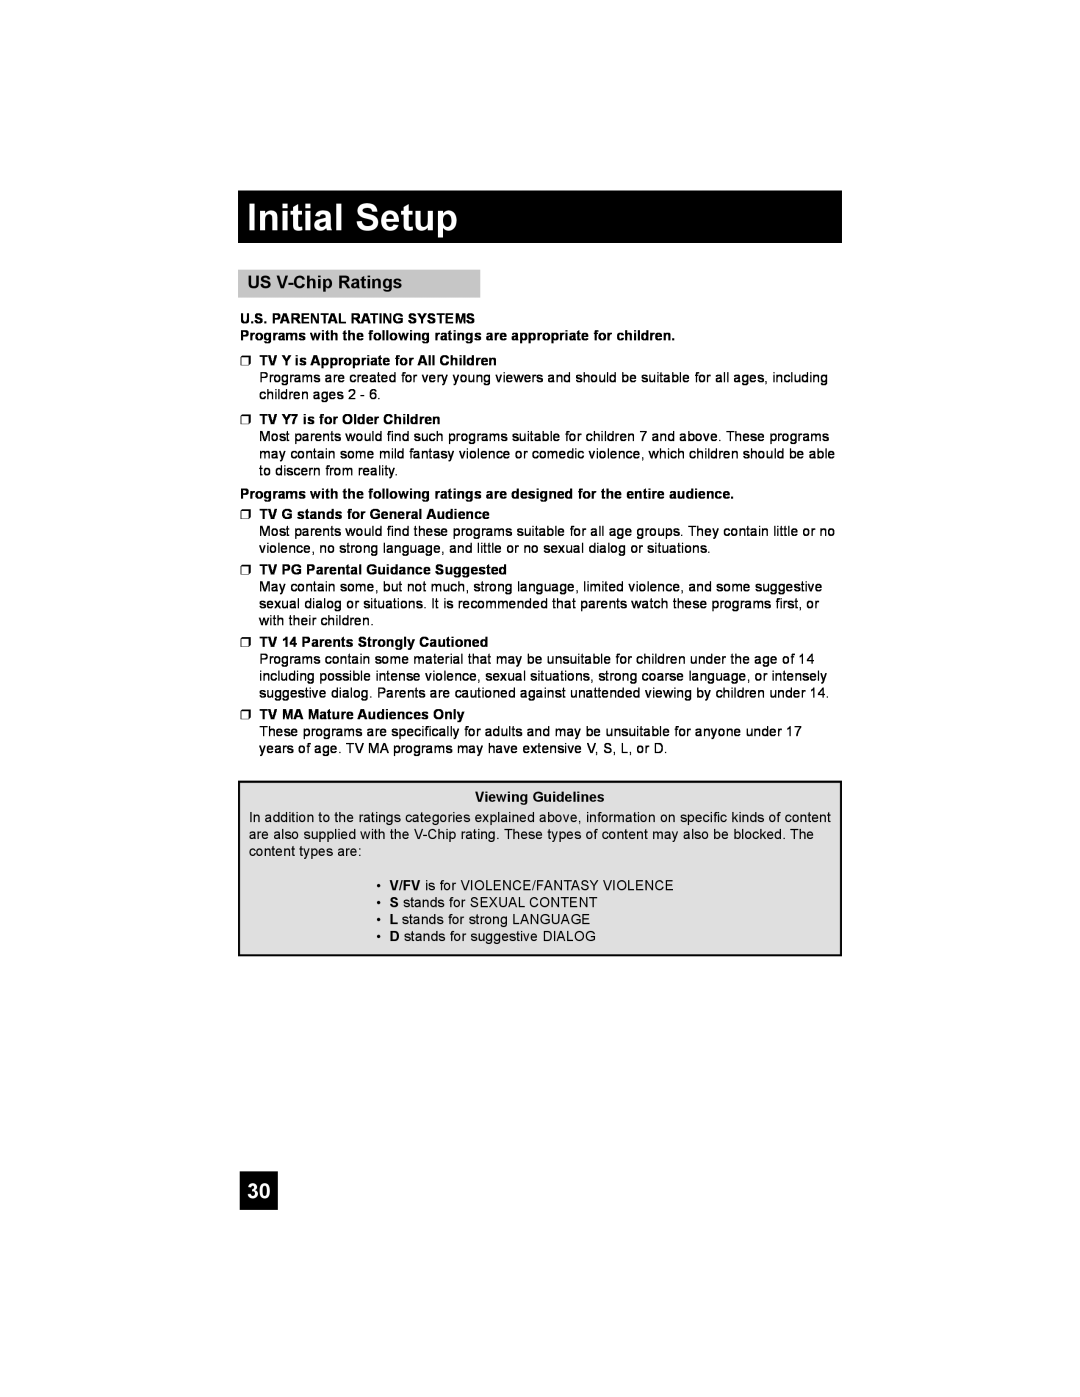 JVC LT-42X688, LT-37X688 manual US V-Chip Ratings, Initial Setup 